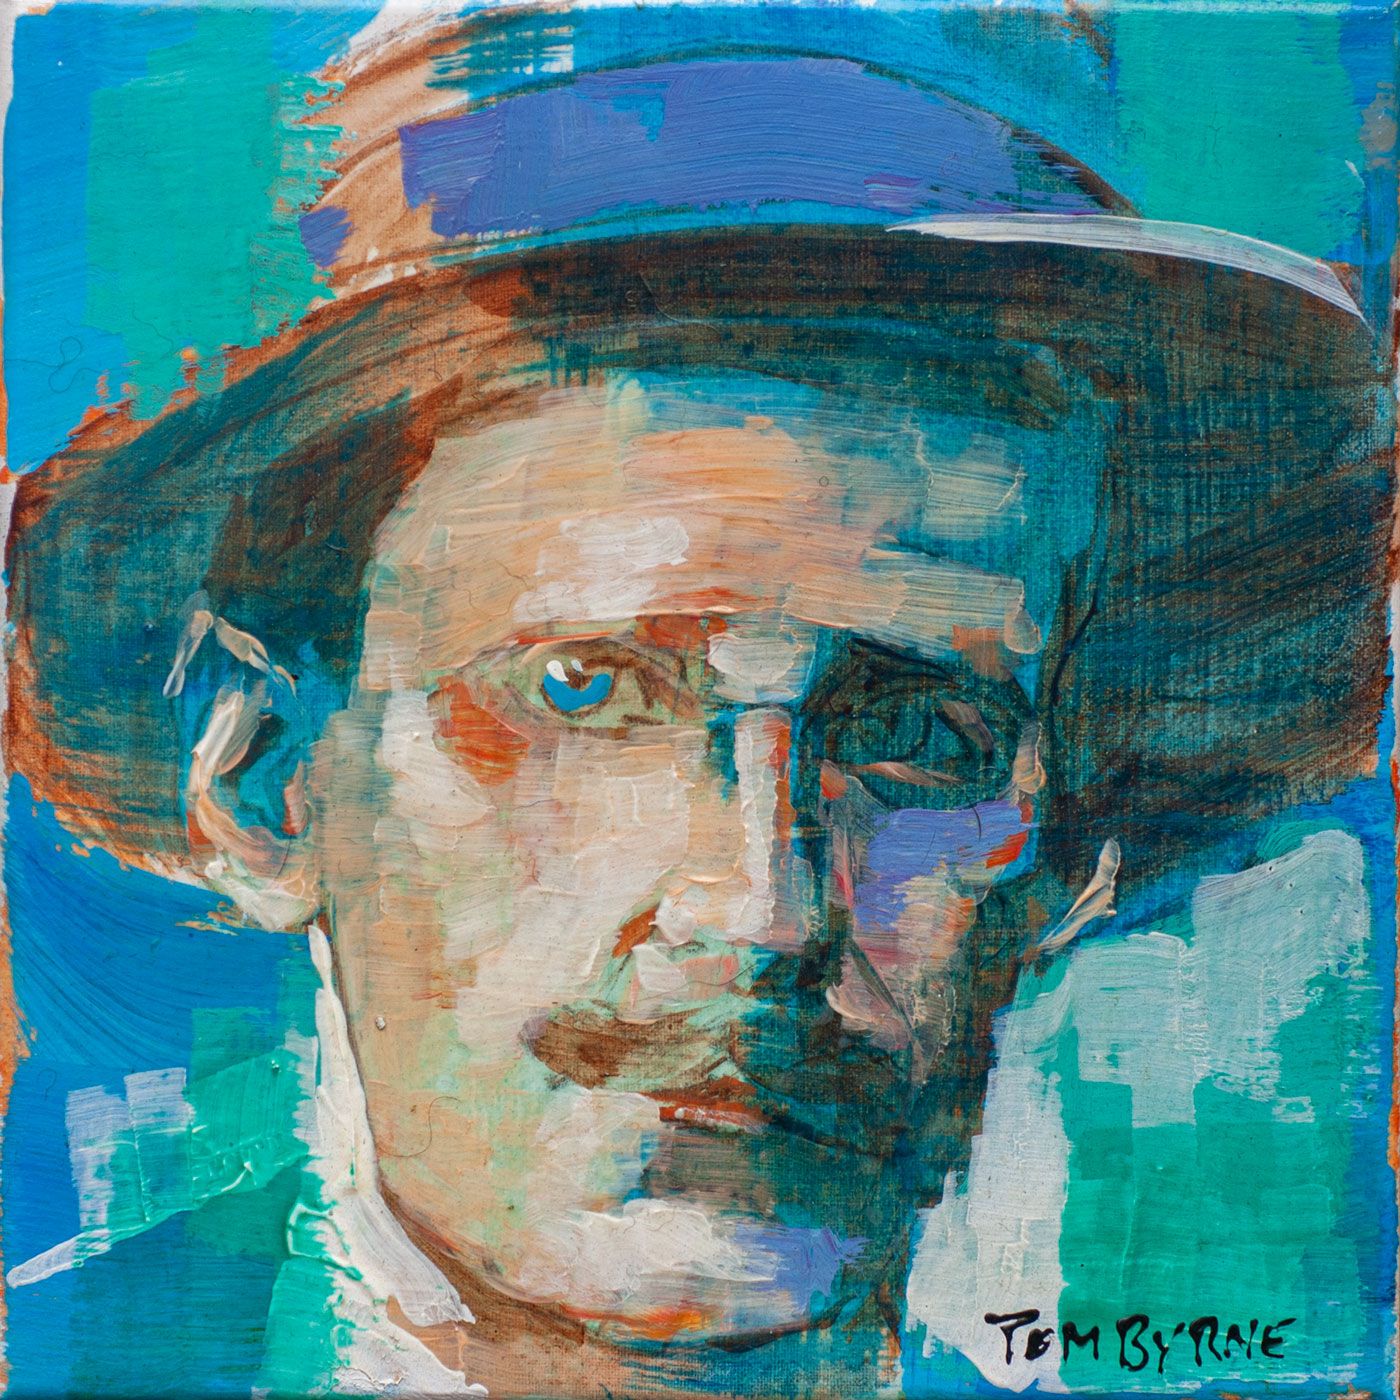 James Joyce in Green by Tom Byrne